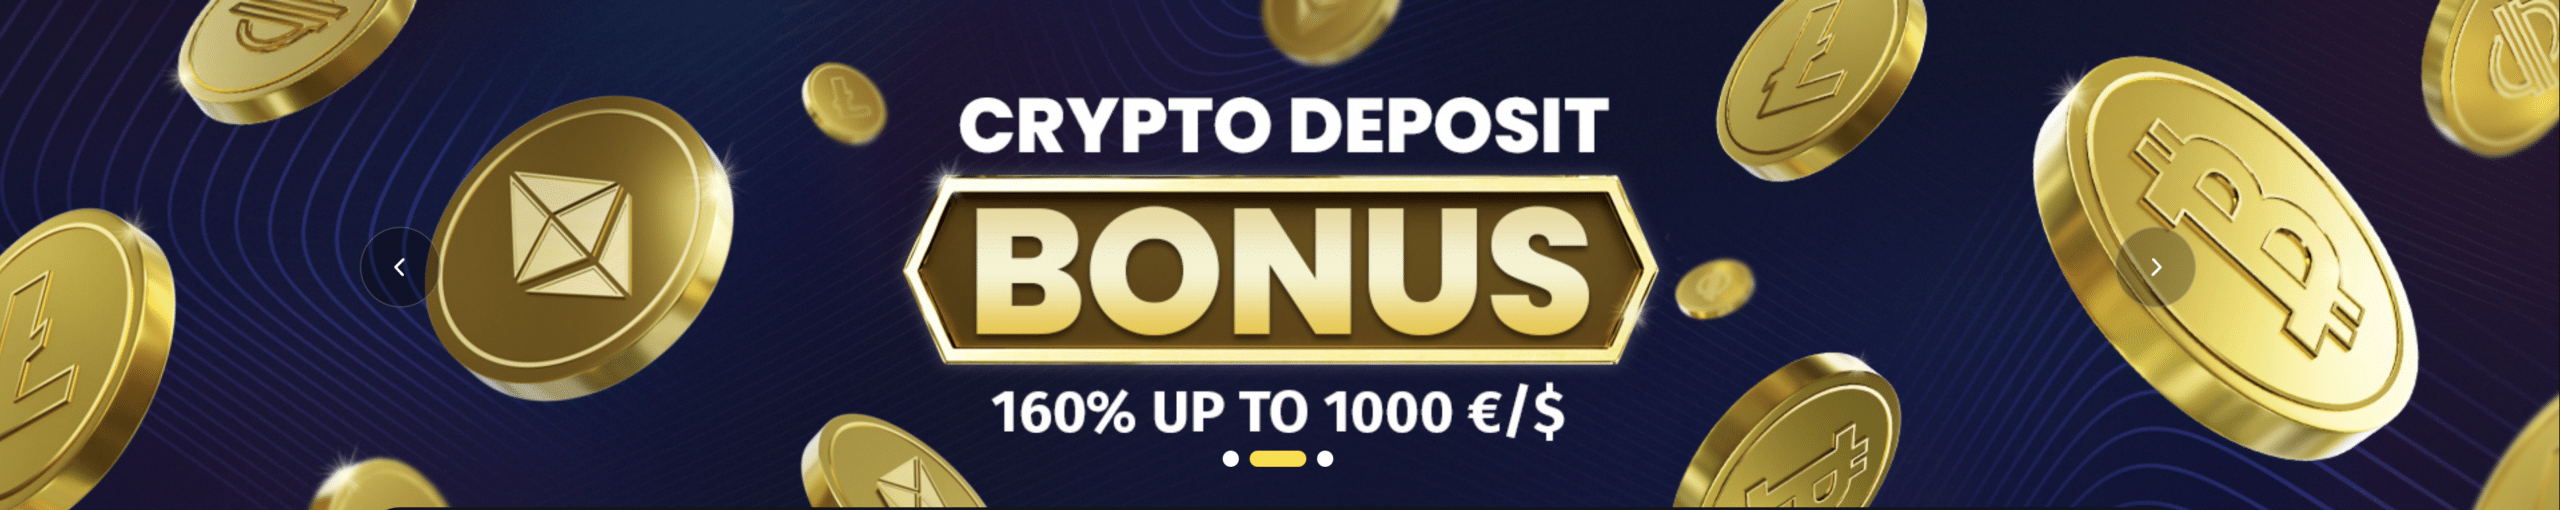 Velobet crypto bonus